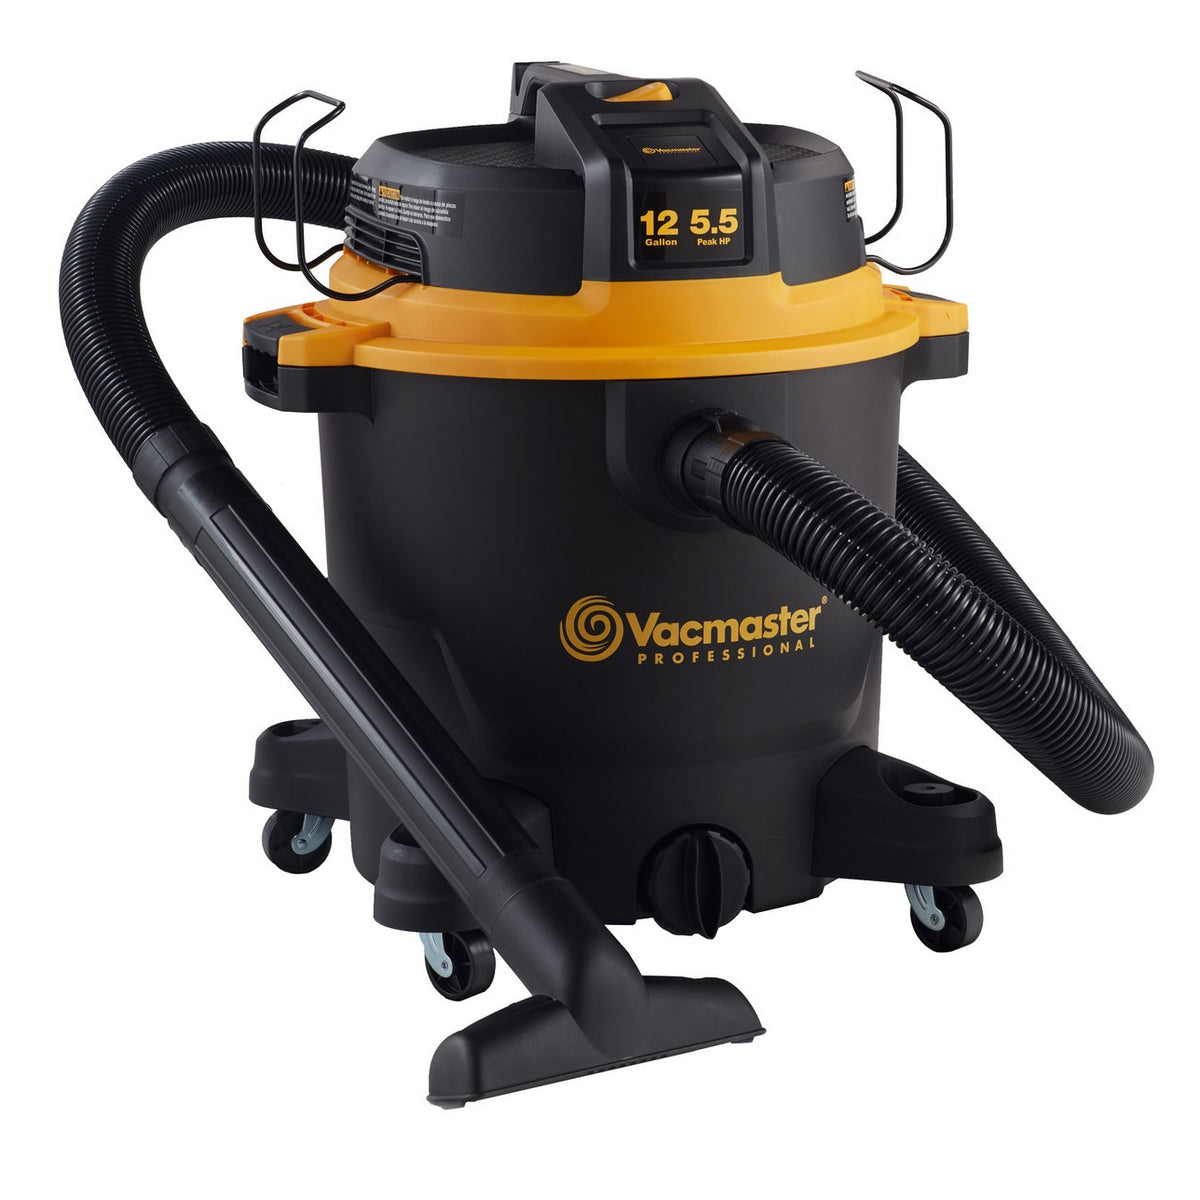 Vacmaster VJH1211PF 0201 Professional Wet/Dry Vac, 12 Gallon, 5.5 Peak HP